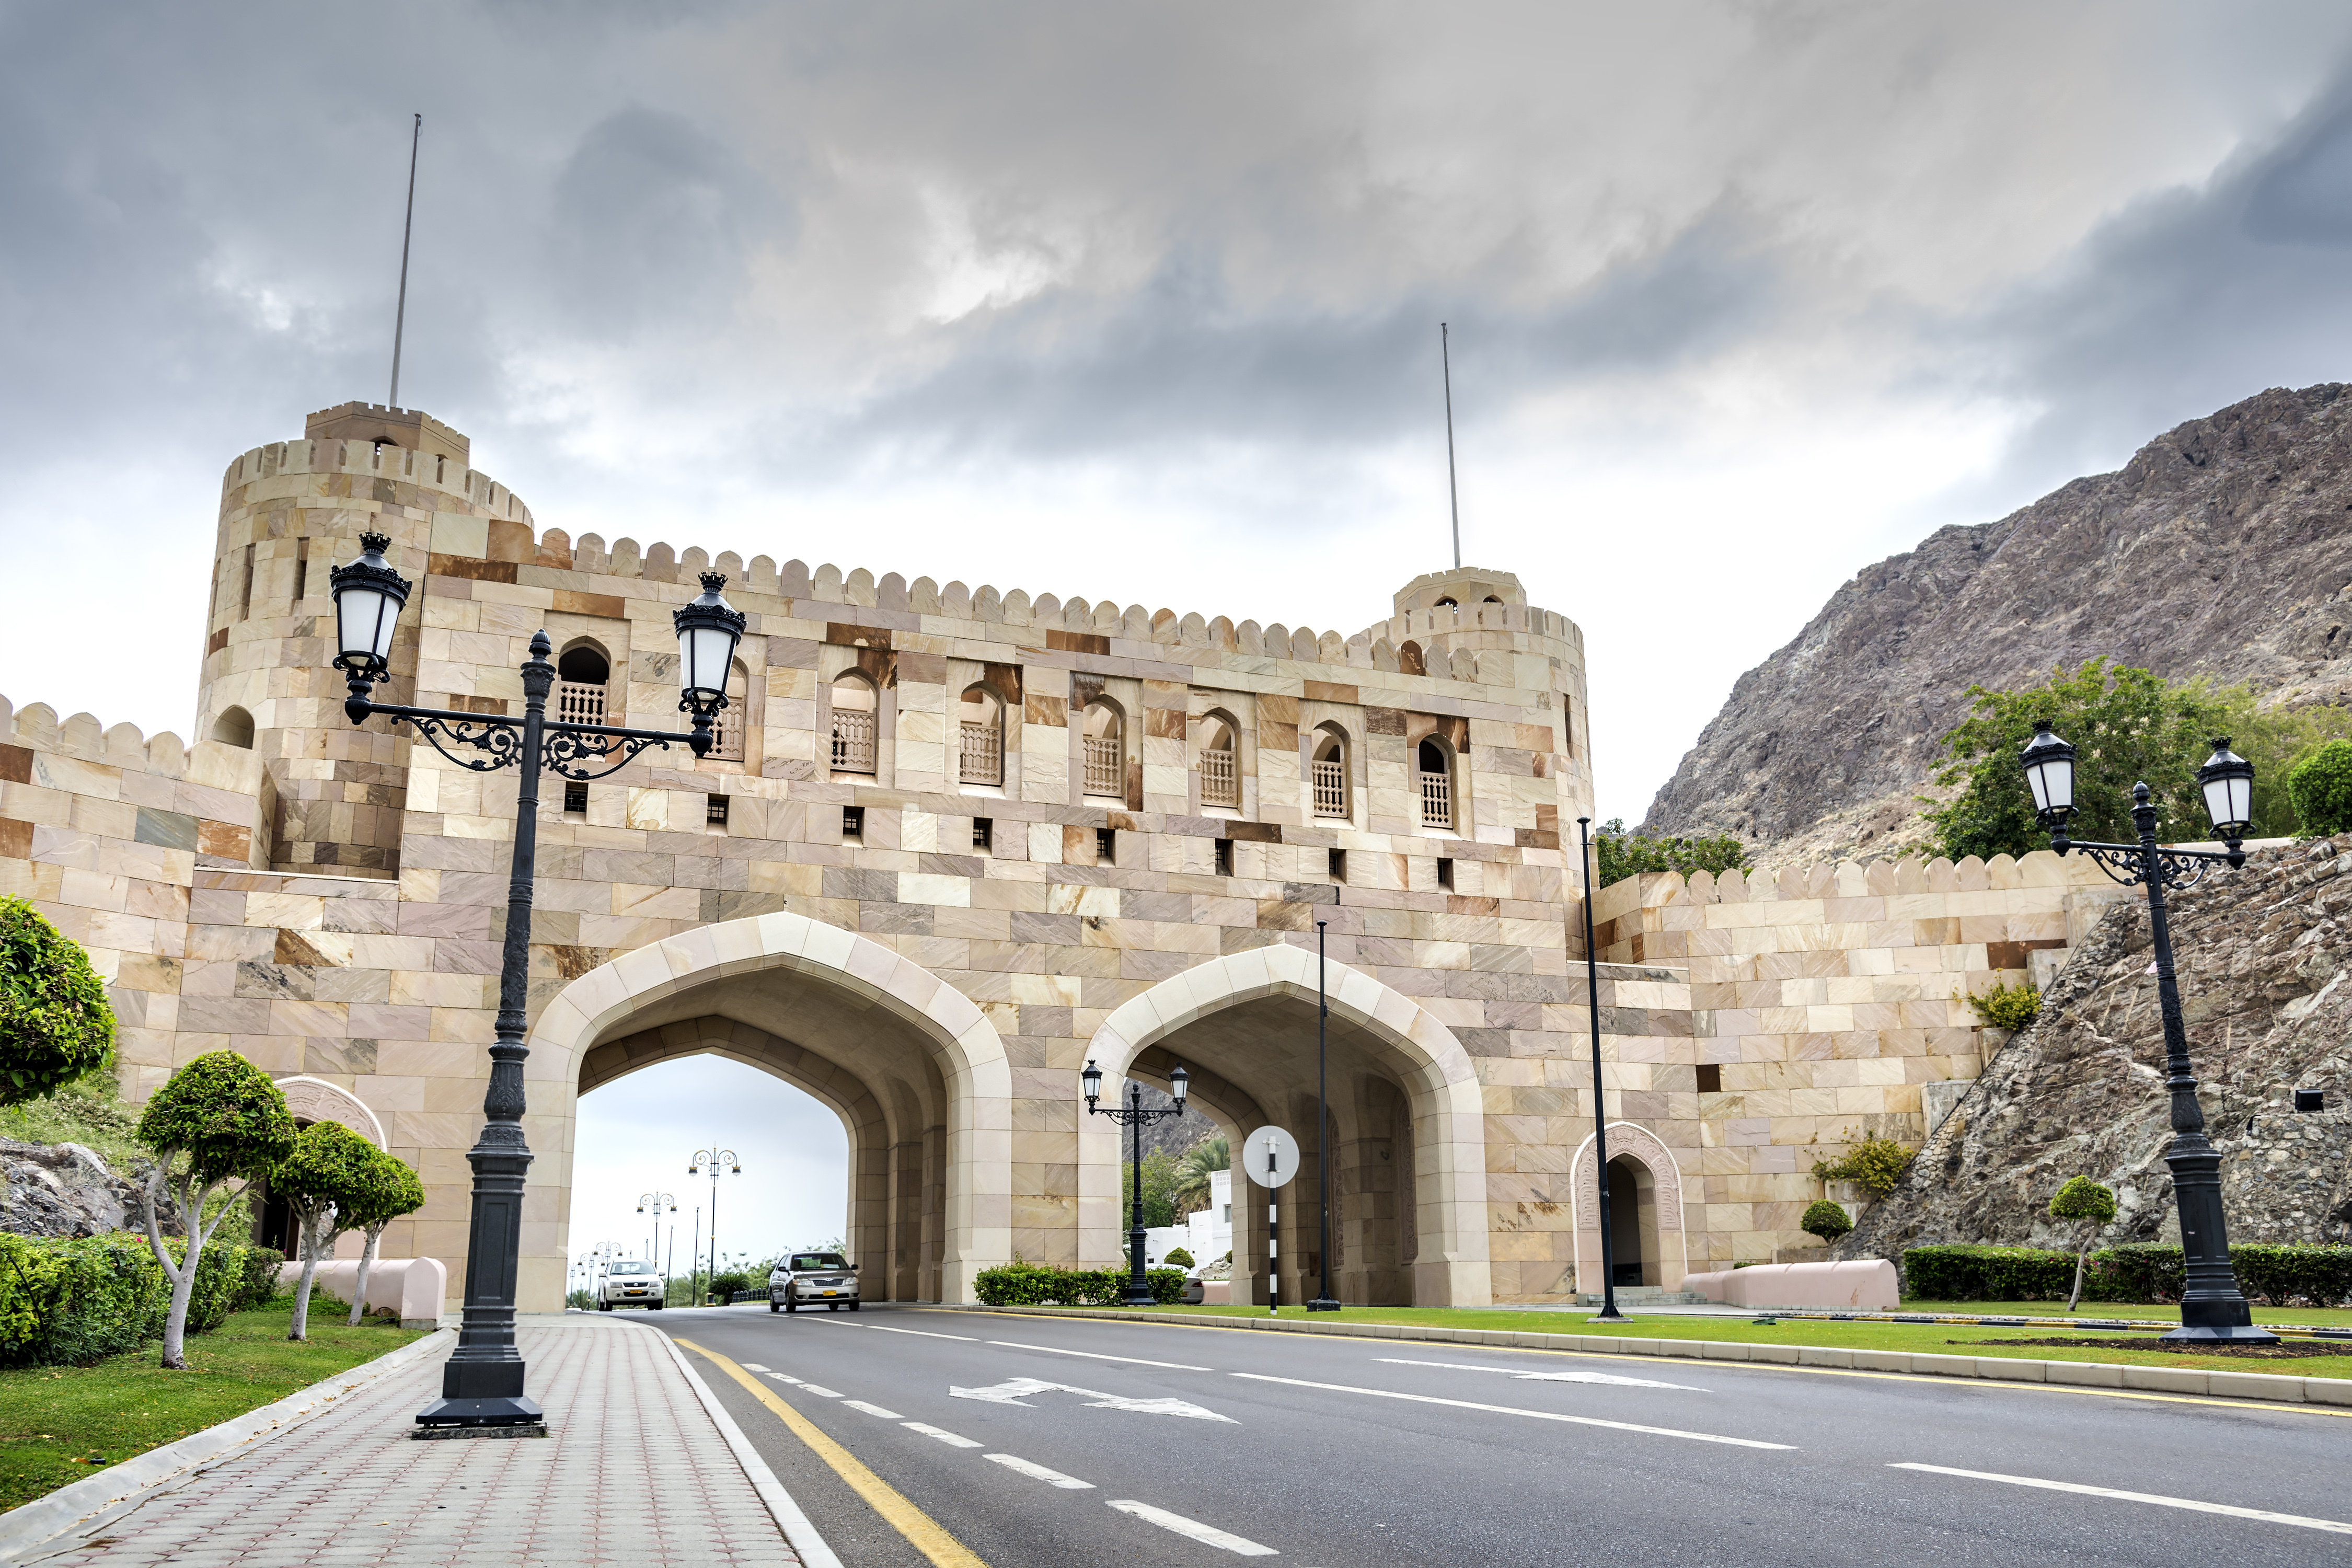 Arab, international media hail Oman’s development